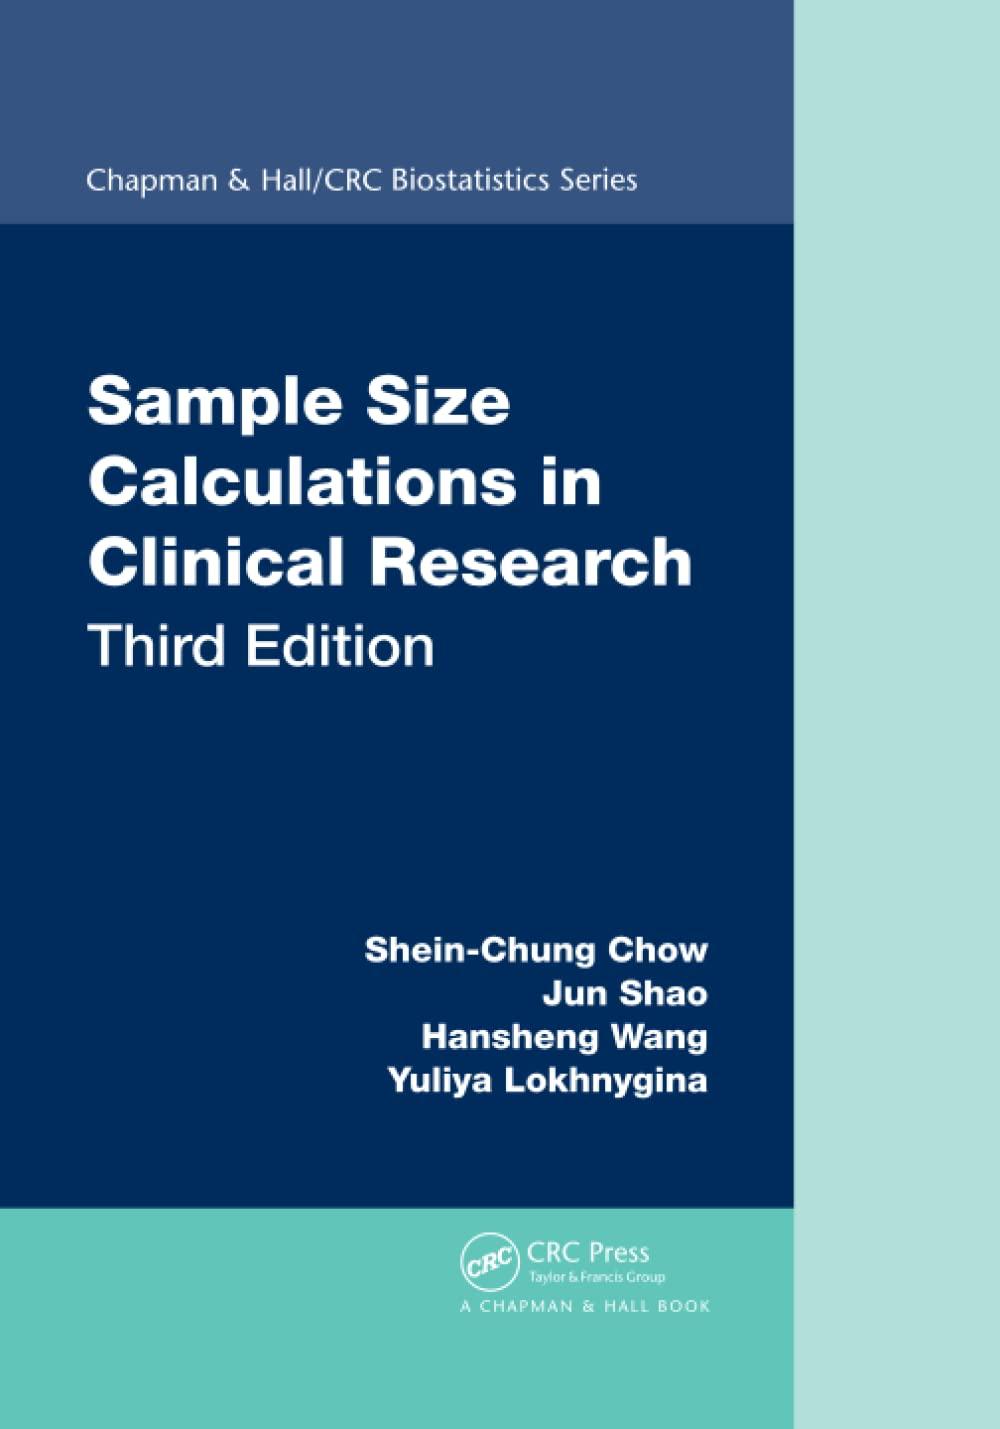 sample size calculations in clinical research 3rd edition shein-chung chow, jun shao, hansheng wang, yuliya